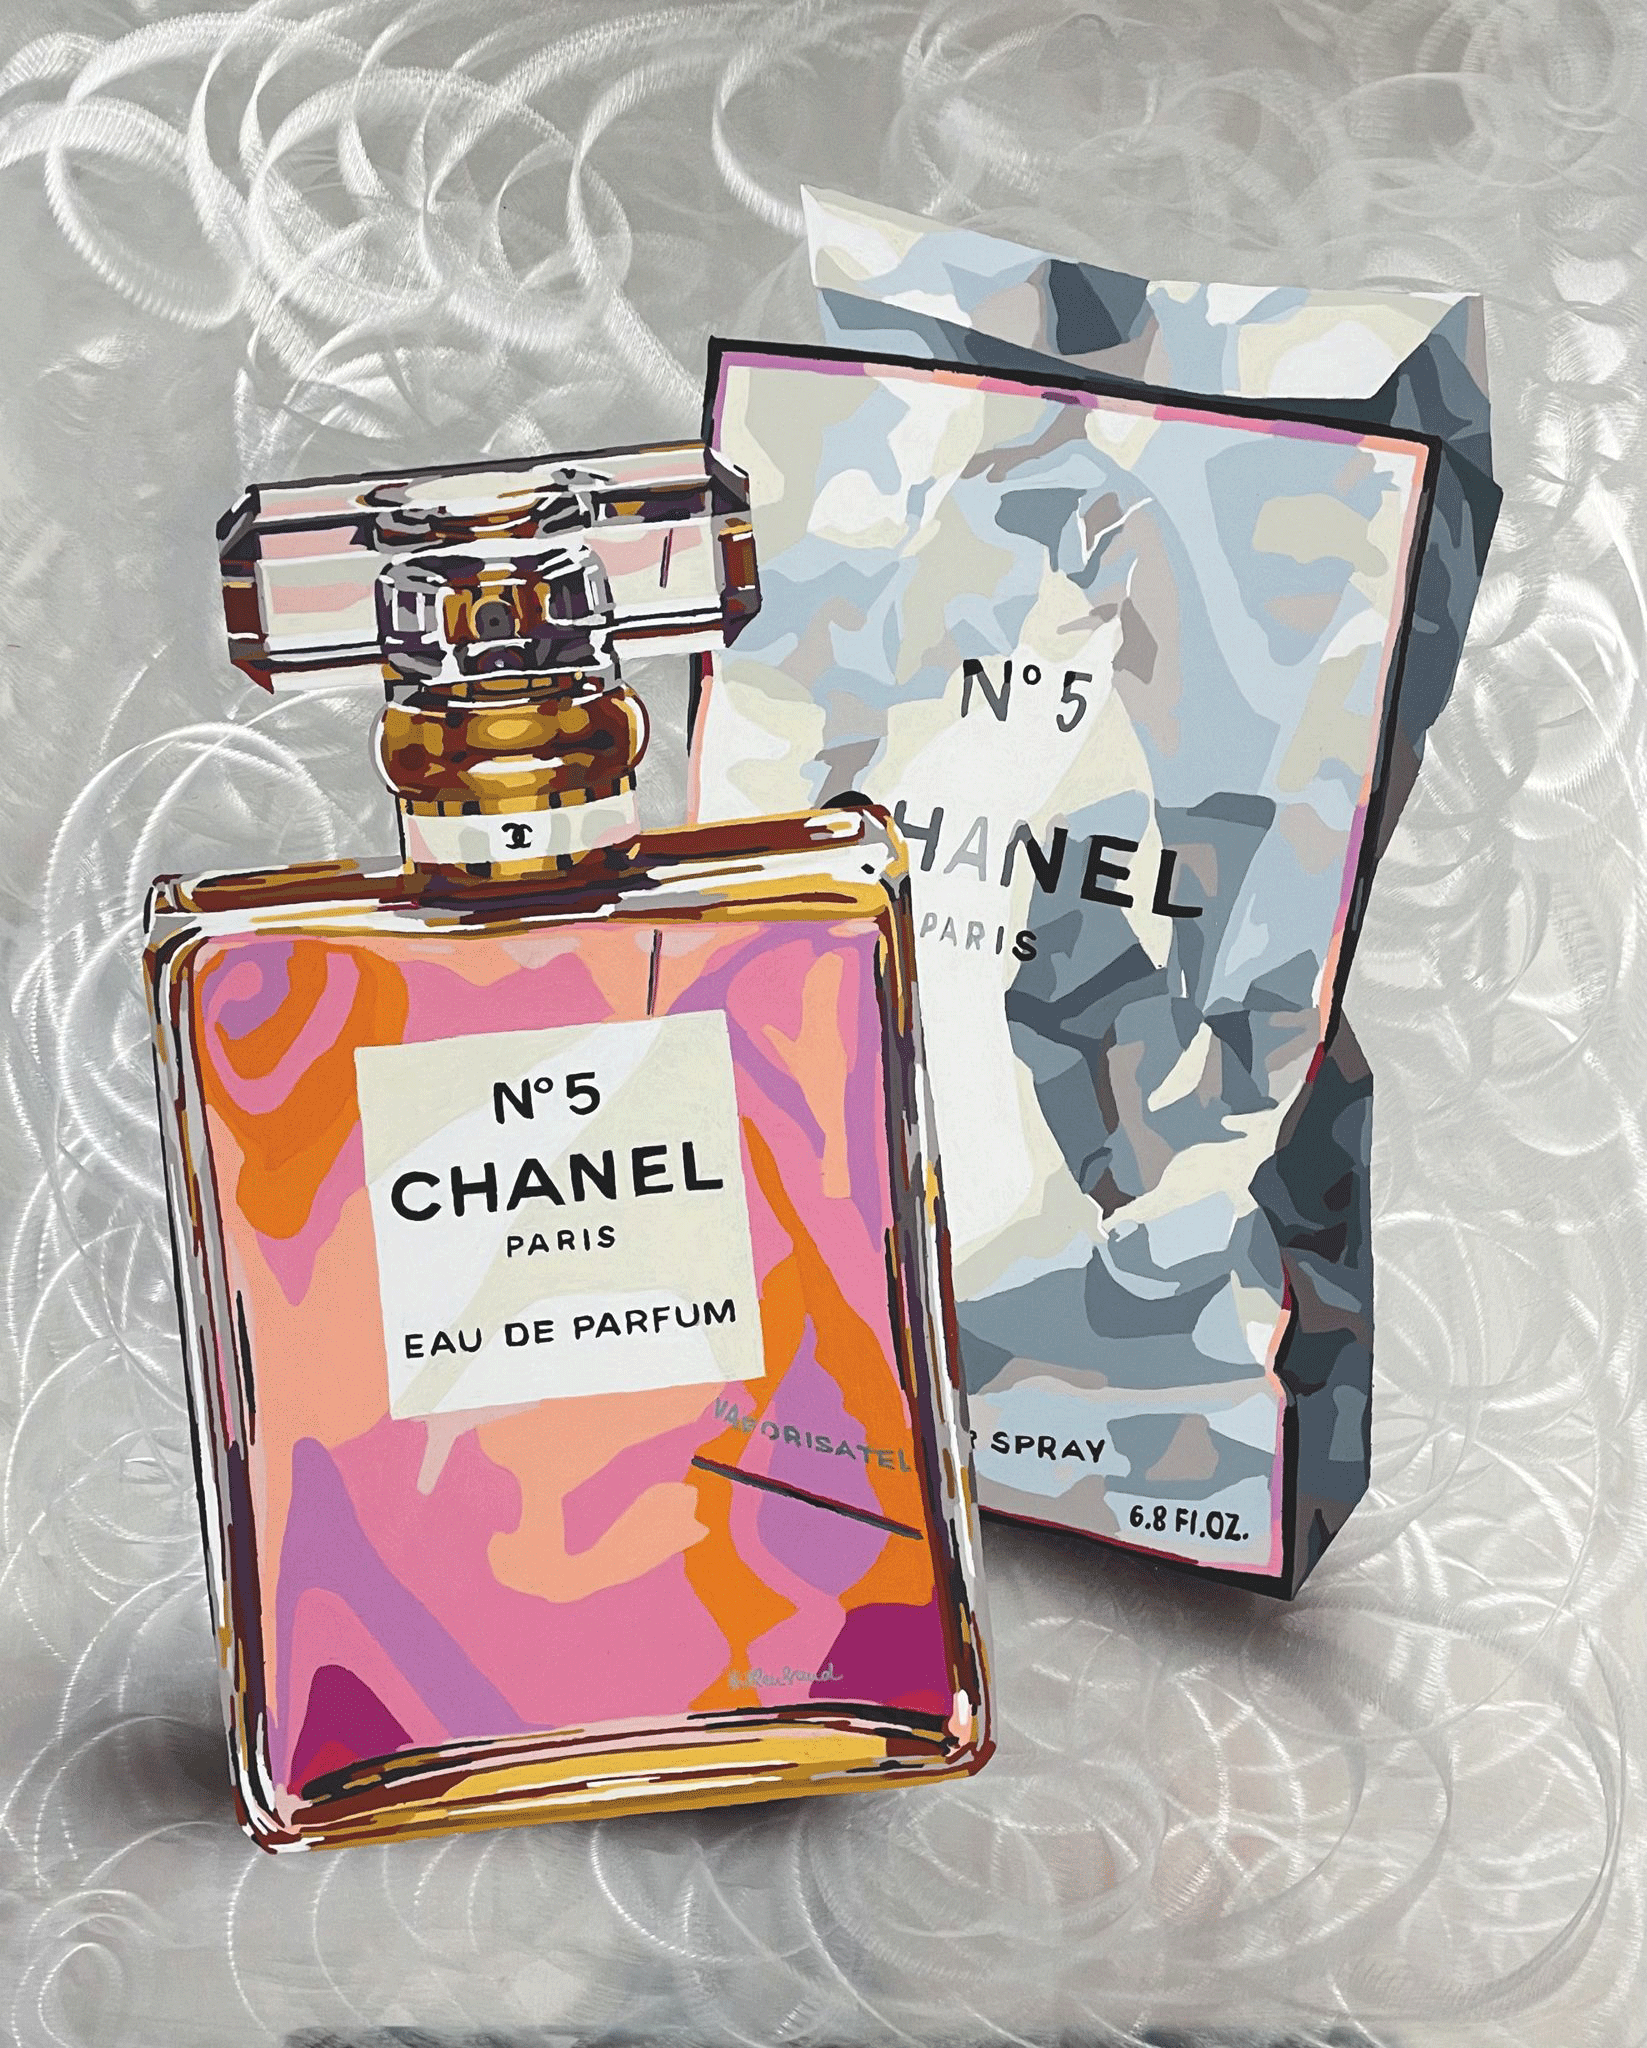 Ute Hillenbrand - "Chanel"